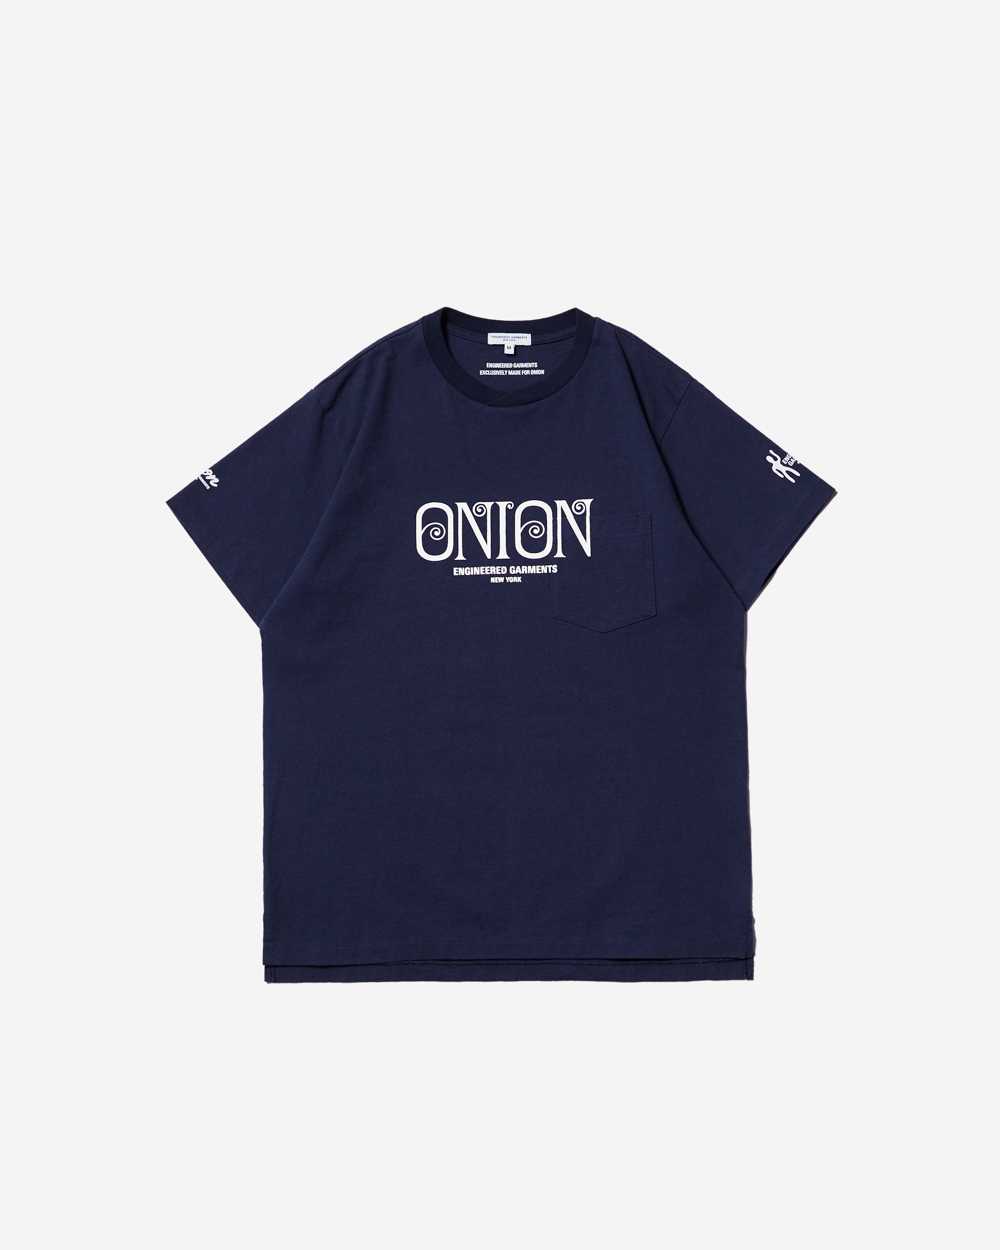 Onion x Engineered Garments